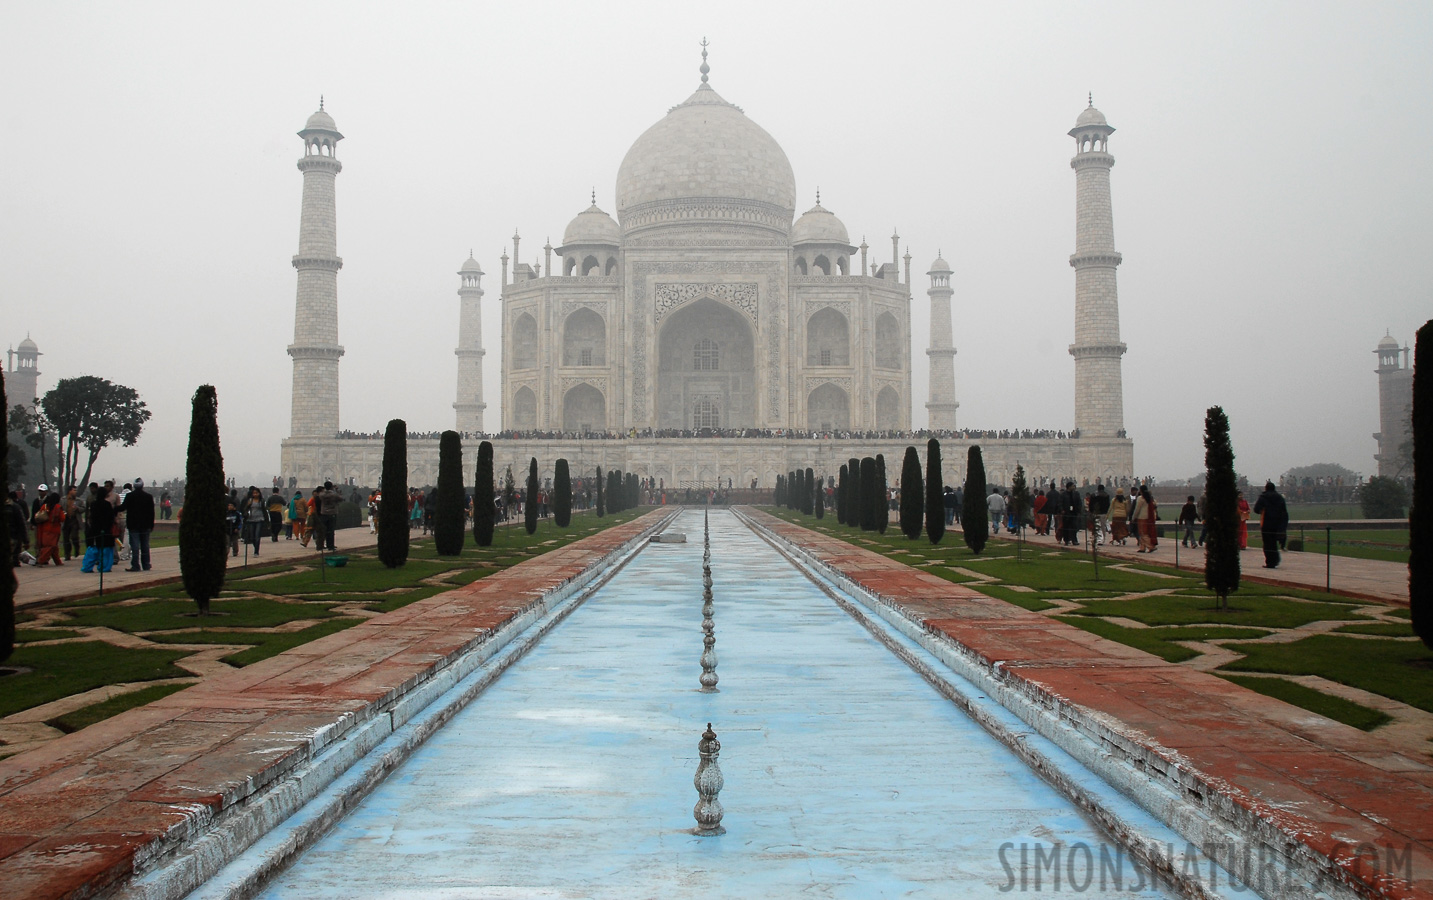 Taj Mahal [18 mm, 1/40 sec at f / 11, ISO 250]